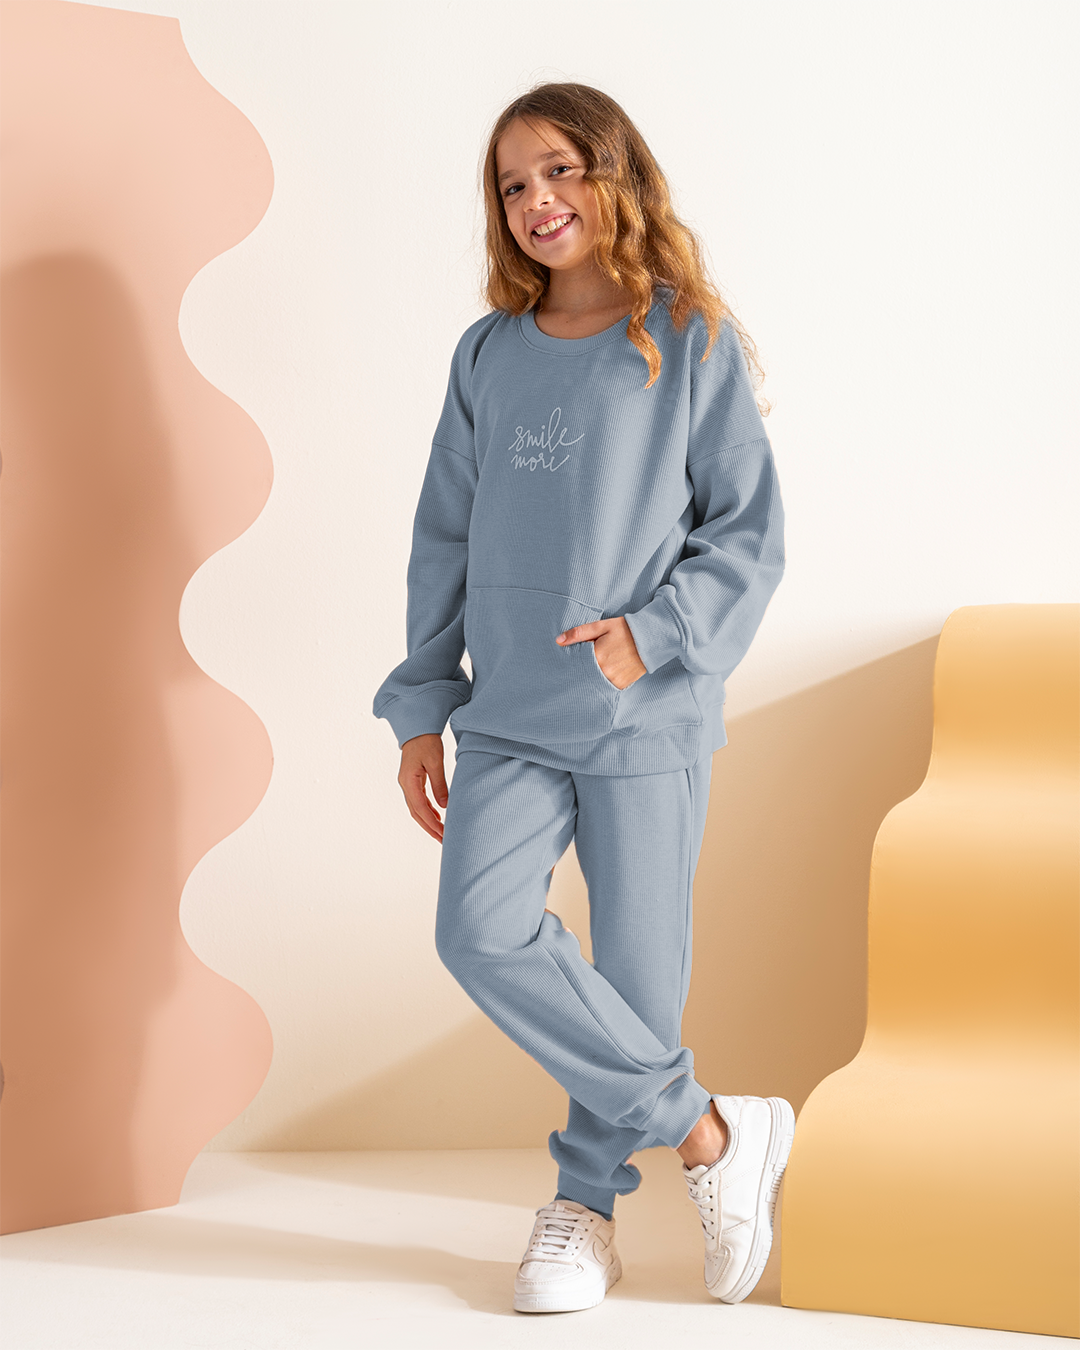 Smile More Girls' pajamas, waffle-like material